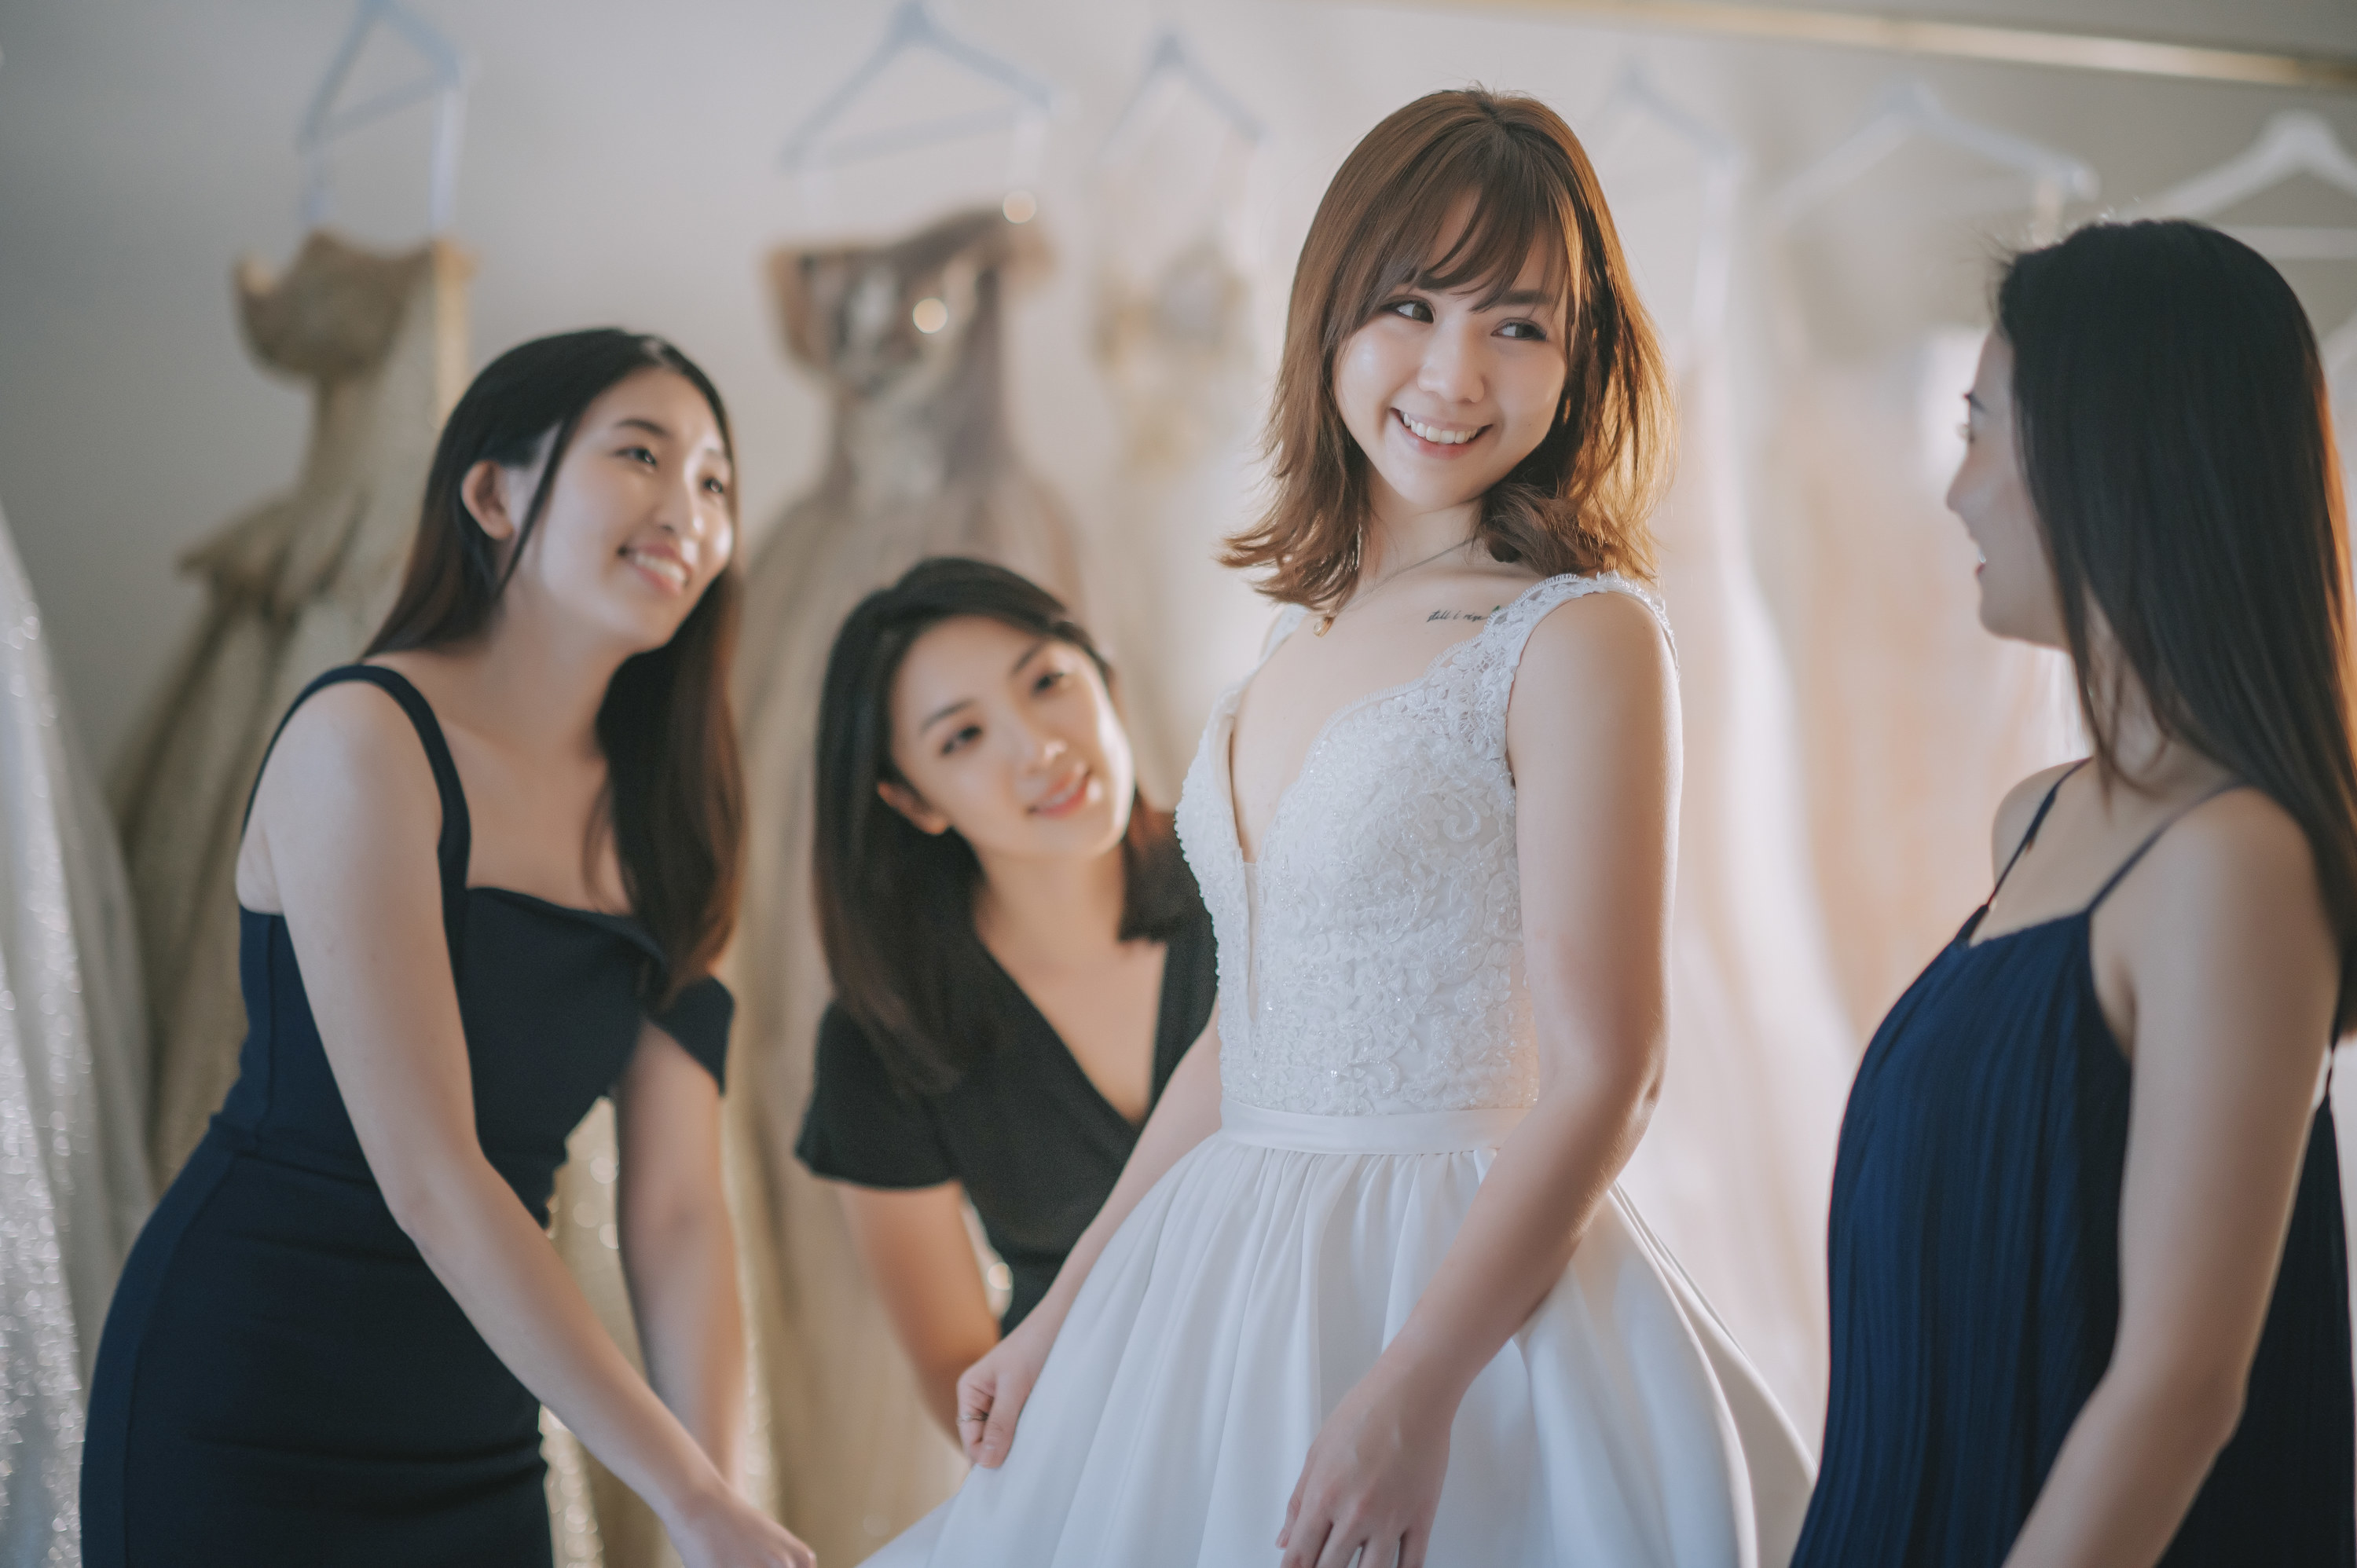 Bride in her wedding gown smiles, next to her bridesmaids